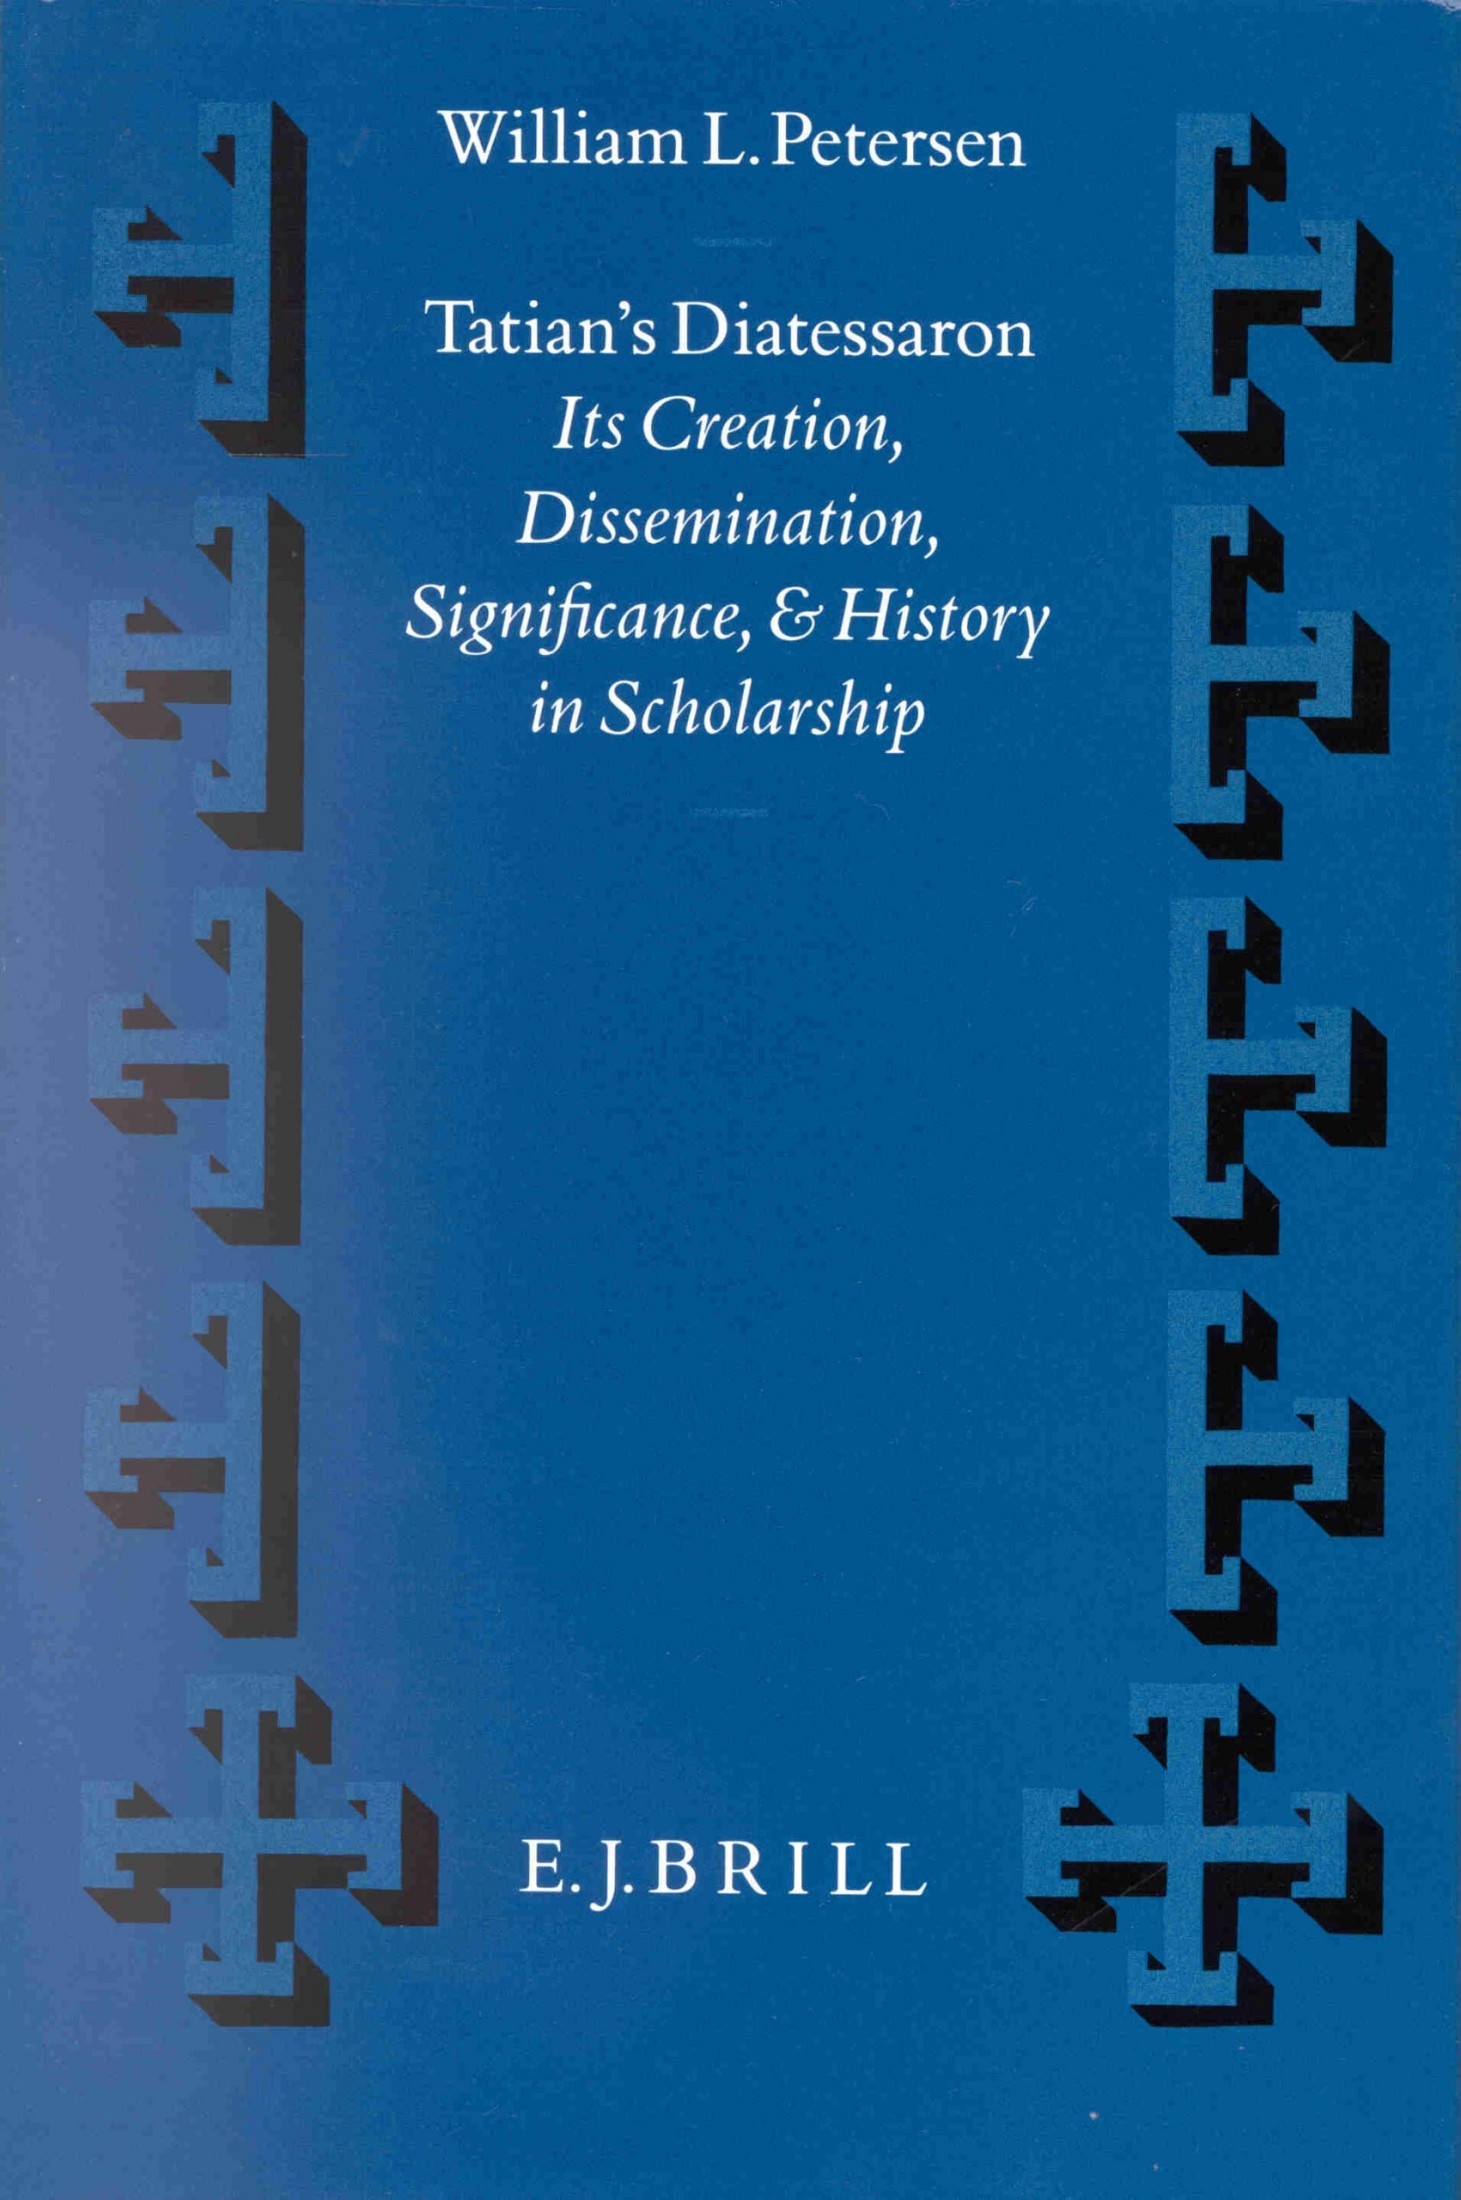 Tatian's Diatessaron: Its Creation, Dissemination, Significance, and History in Scholarship